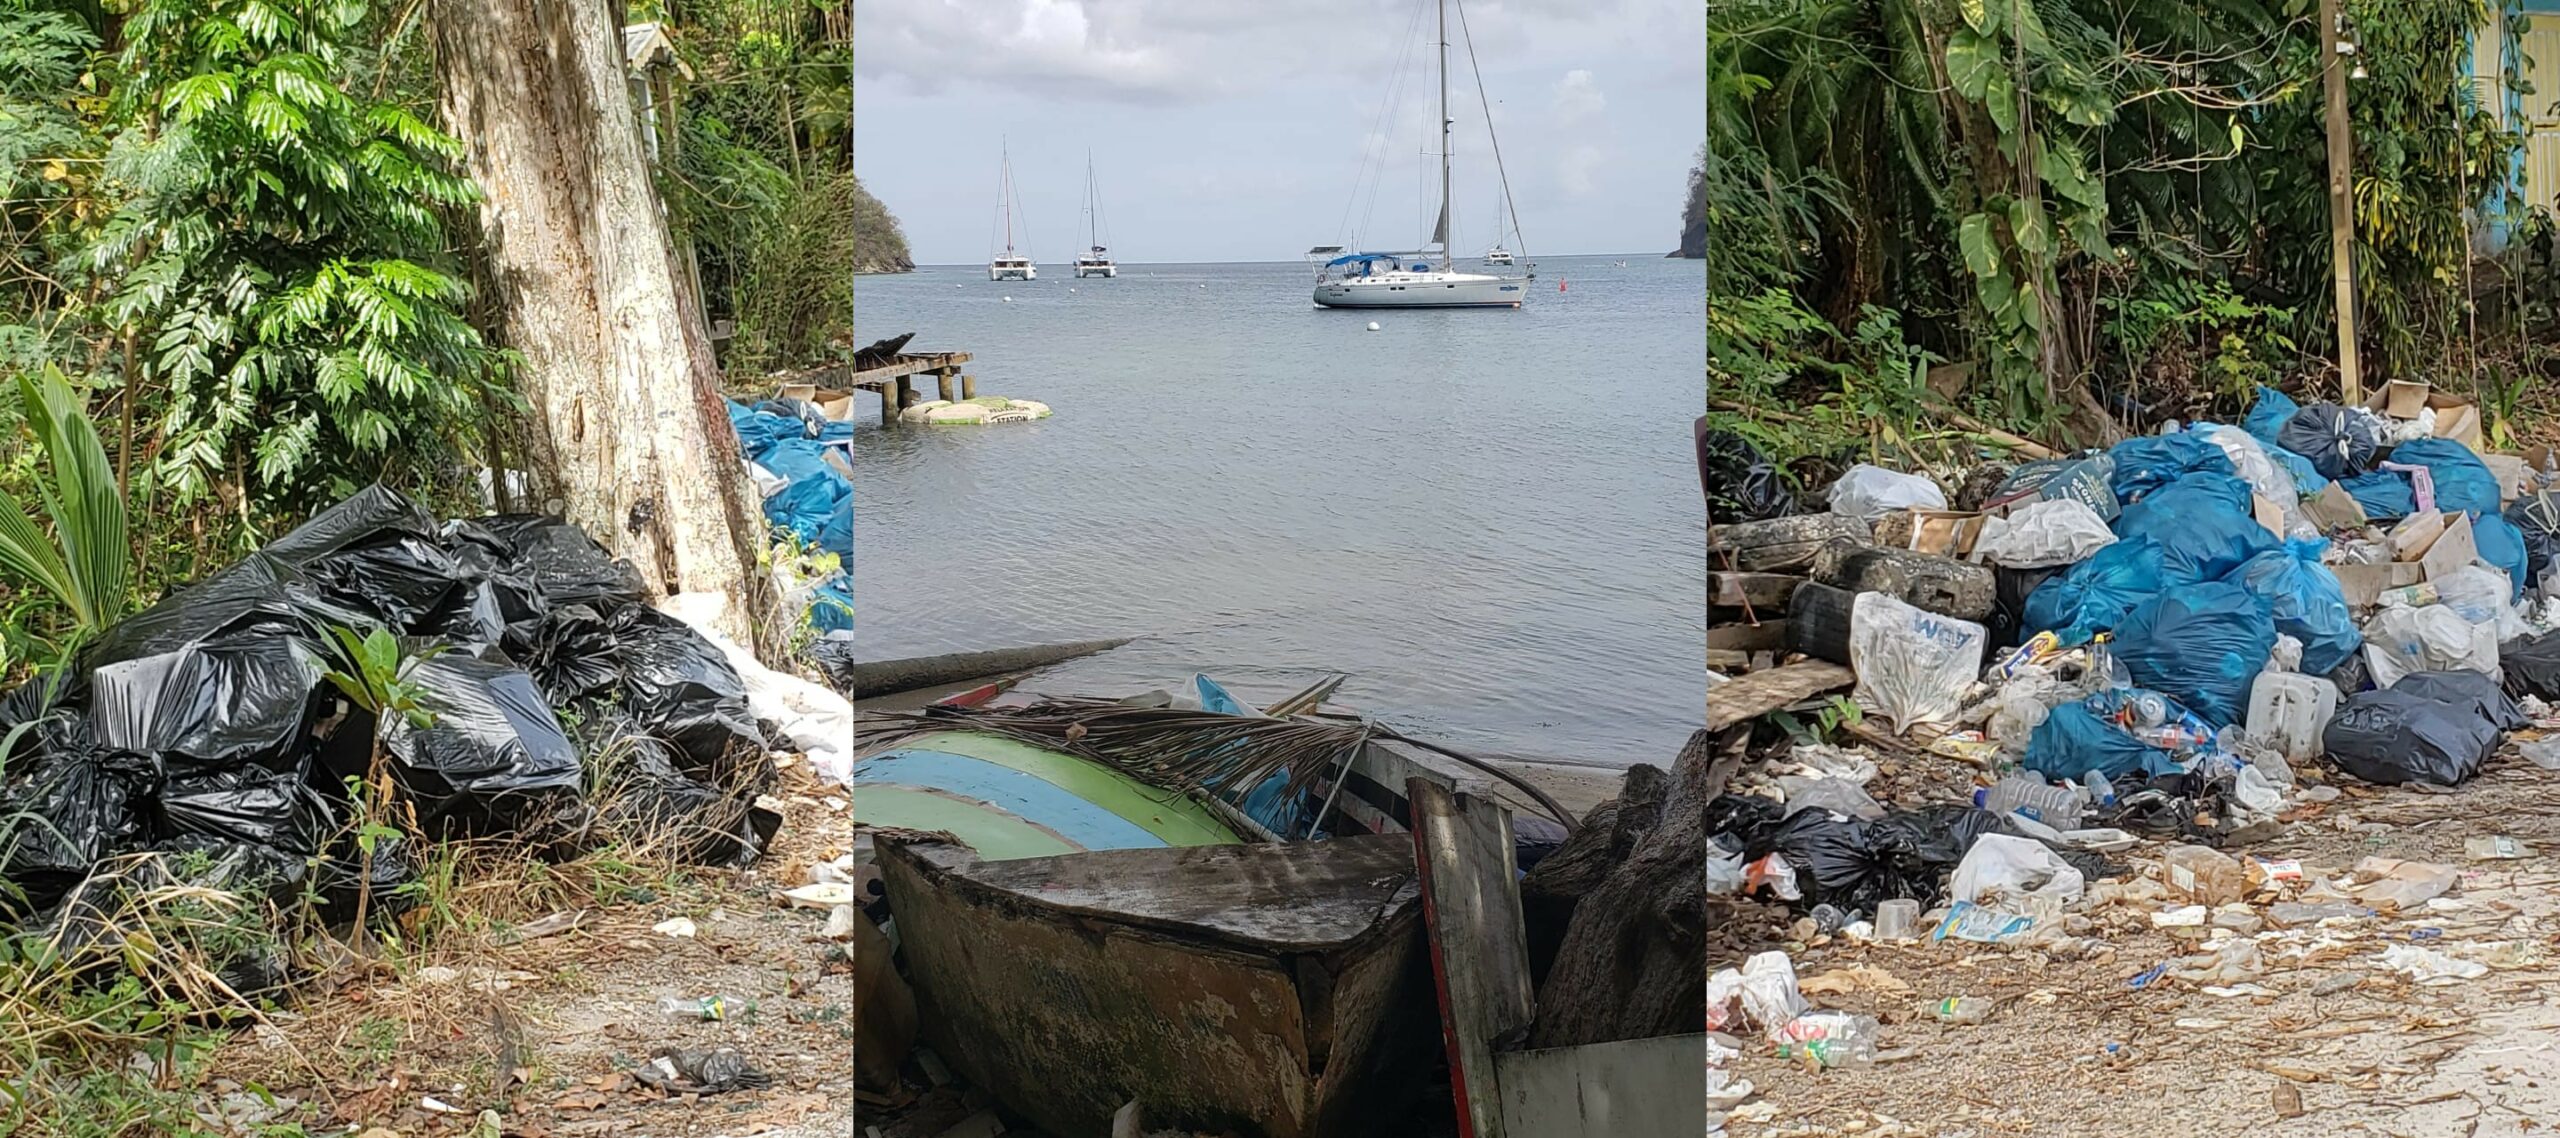 WATCH: Concern Over Garbage Pileup In Marigot